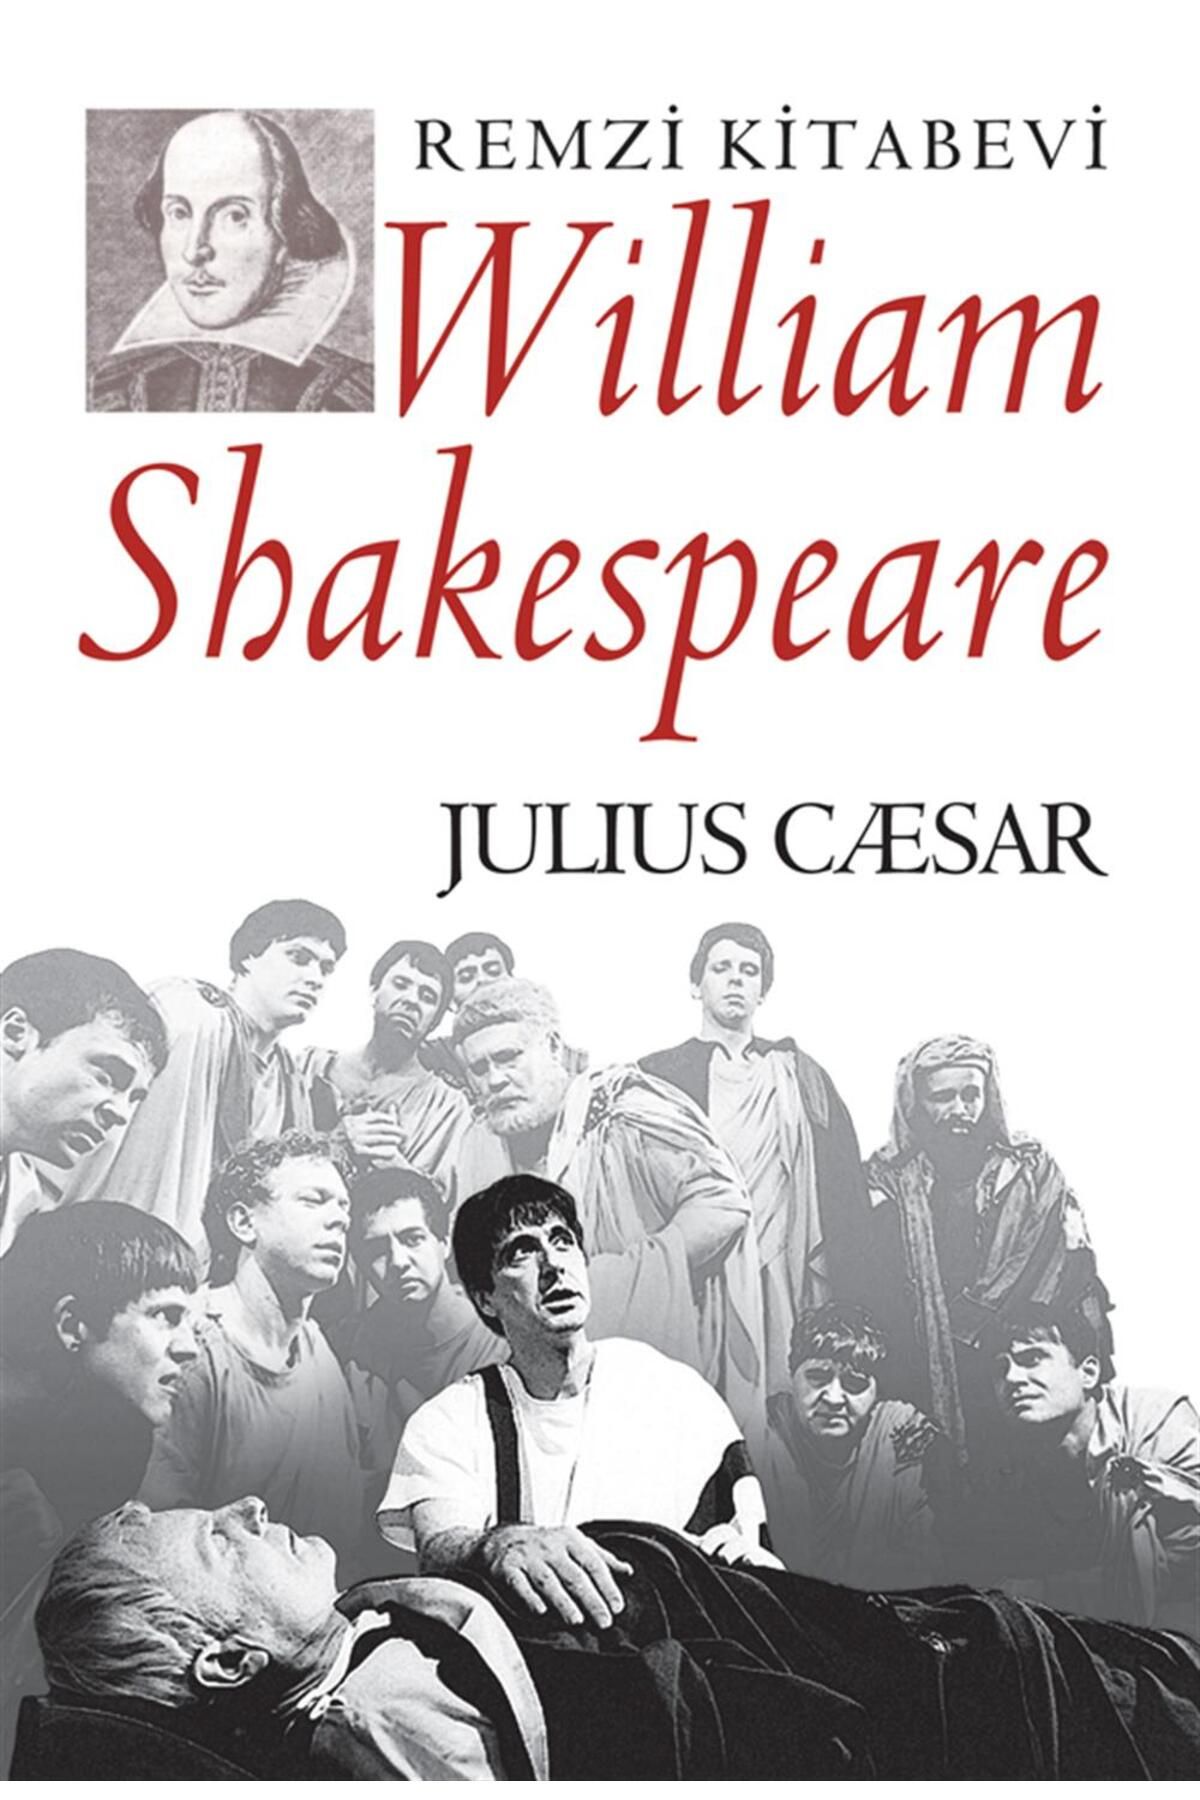 Remzi Kitabevi Julius Caesar